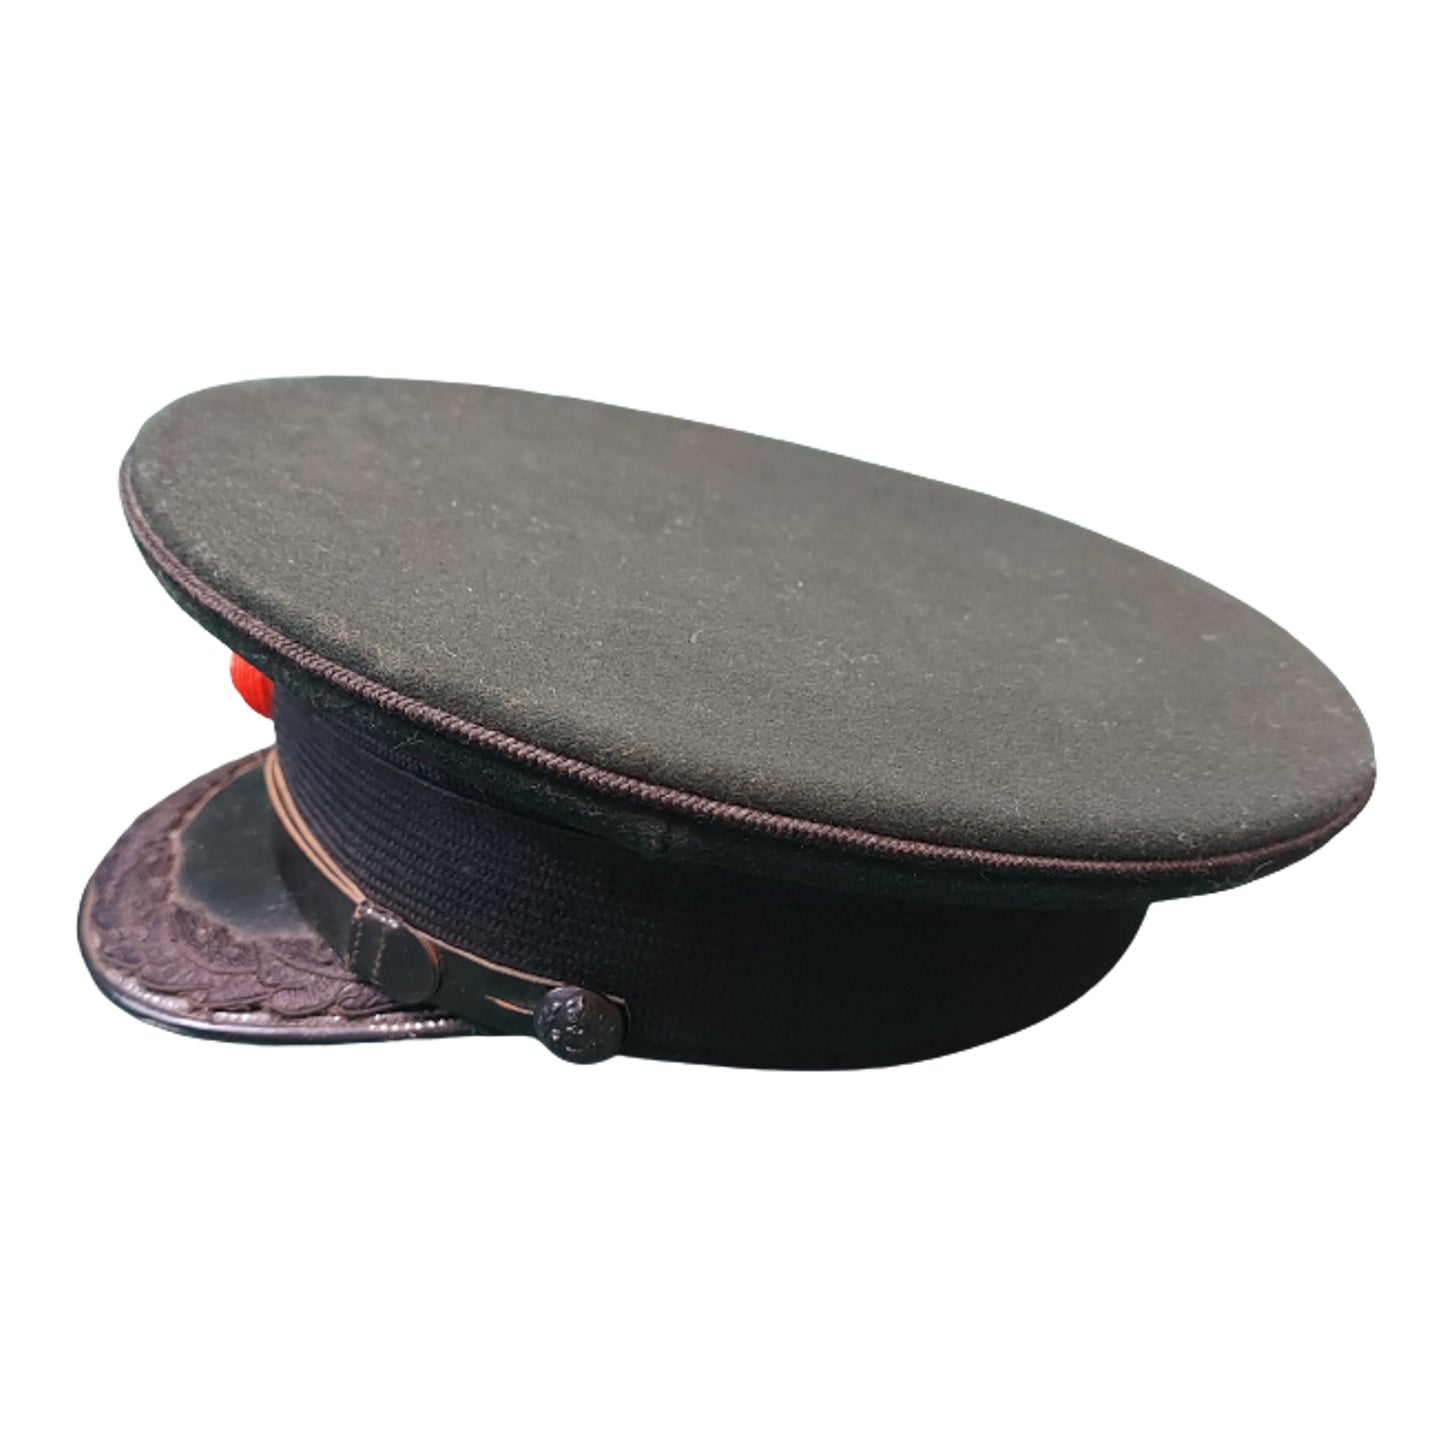 1910-1920 Carabiniers De Sherbrooke Staff Pattern Officer's Forage cap